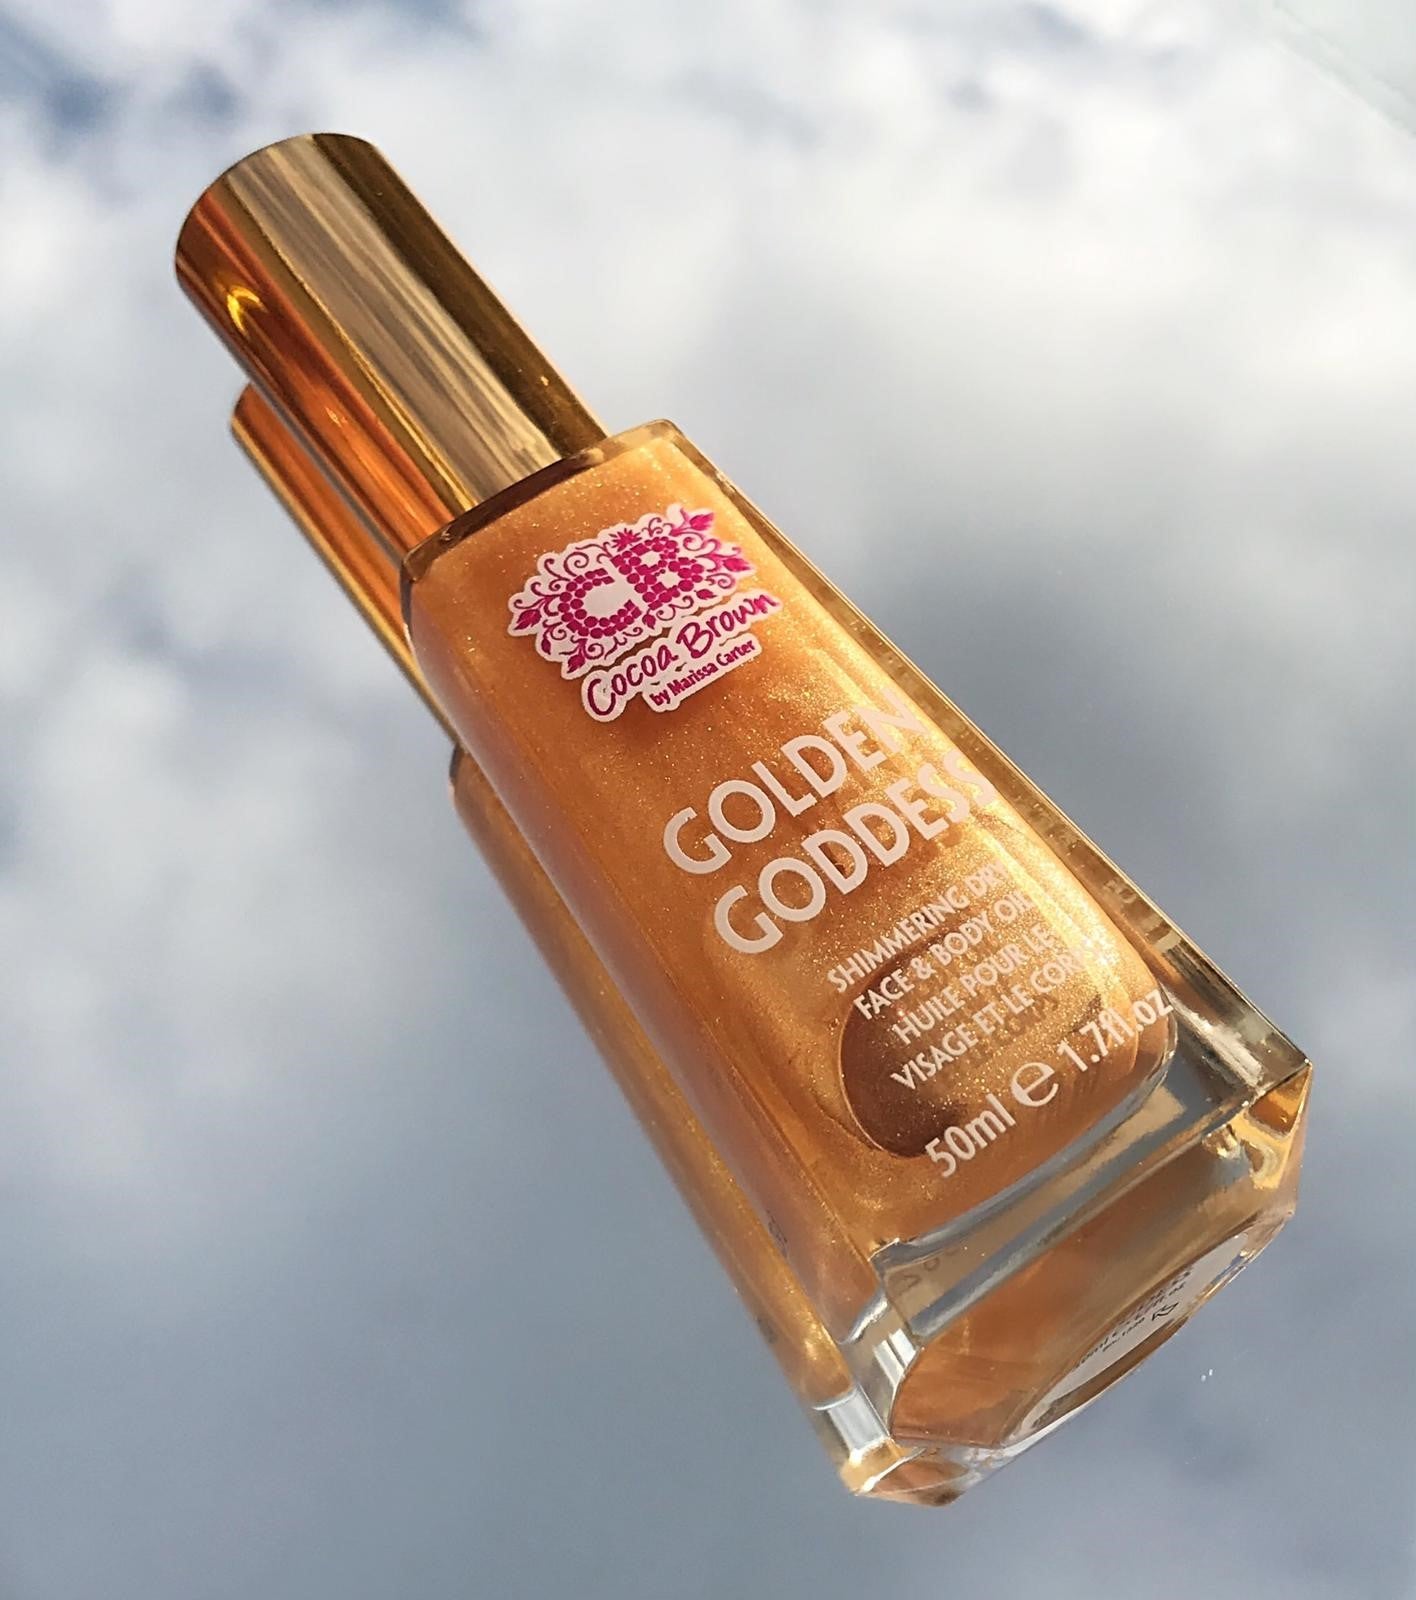 Cocoa Brown Golden Goddess Highlighter